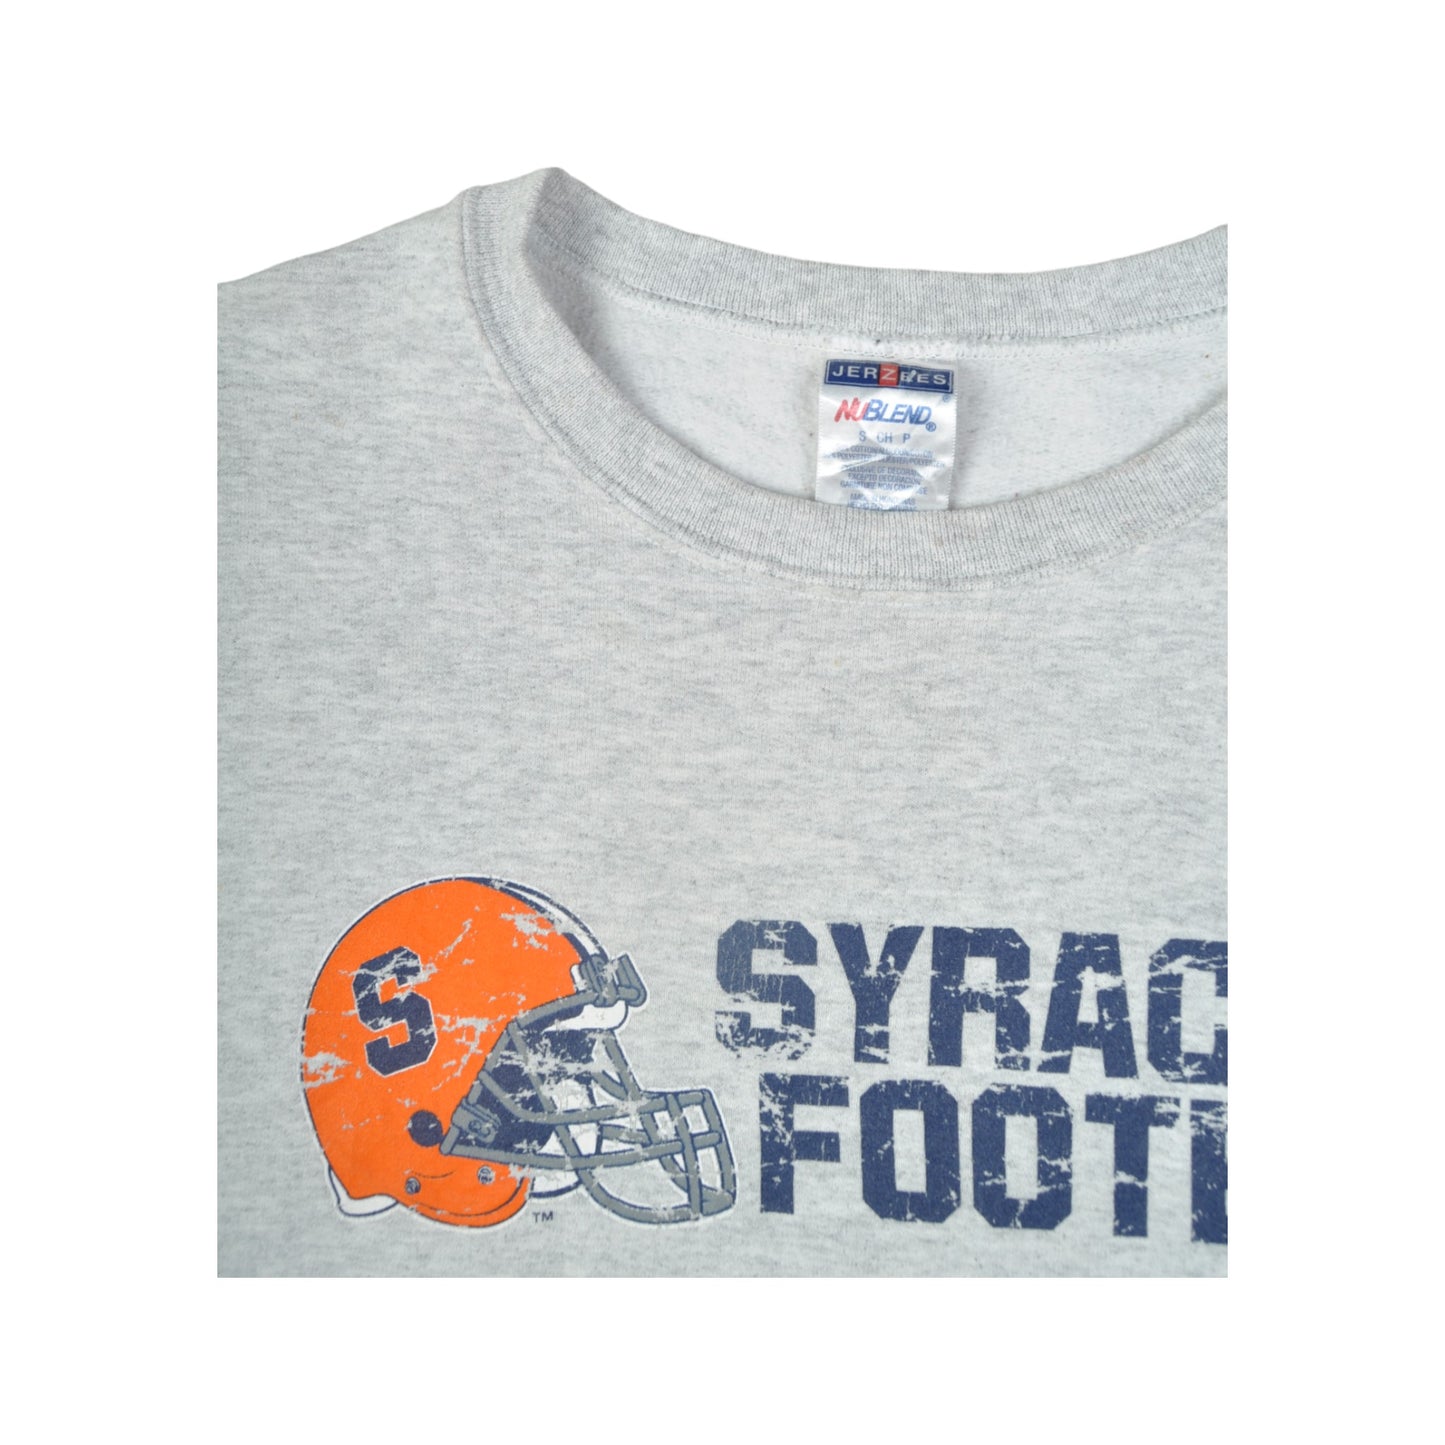 Vintage Syracuse Football Sweater Grey Small